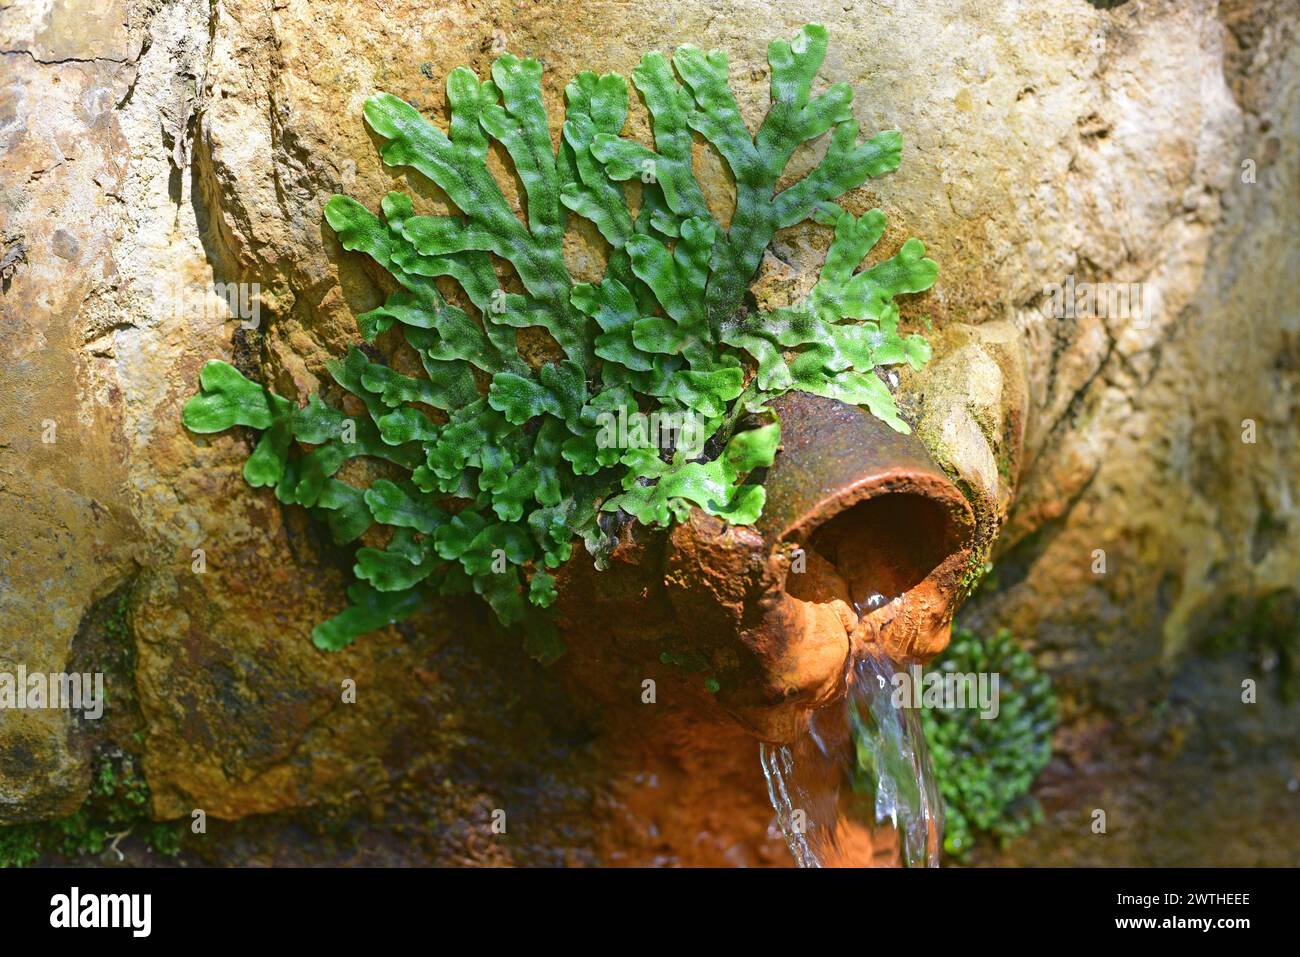 Great scented liverwort (Conocephalum conicum). This photo was taken in La Albera, Girona, Catalonia, Spain. Stock Photo